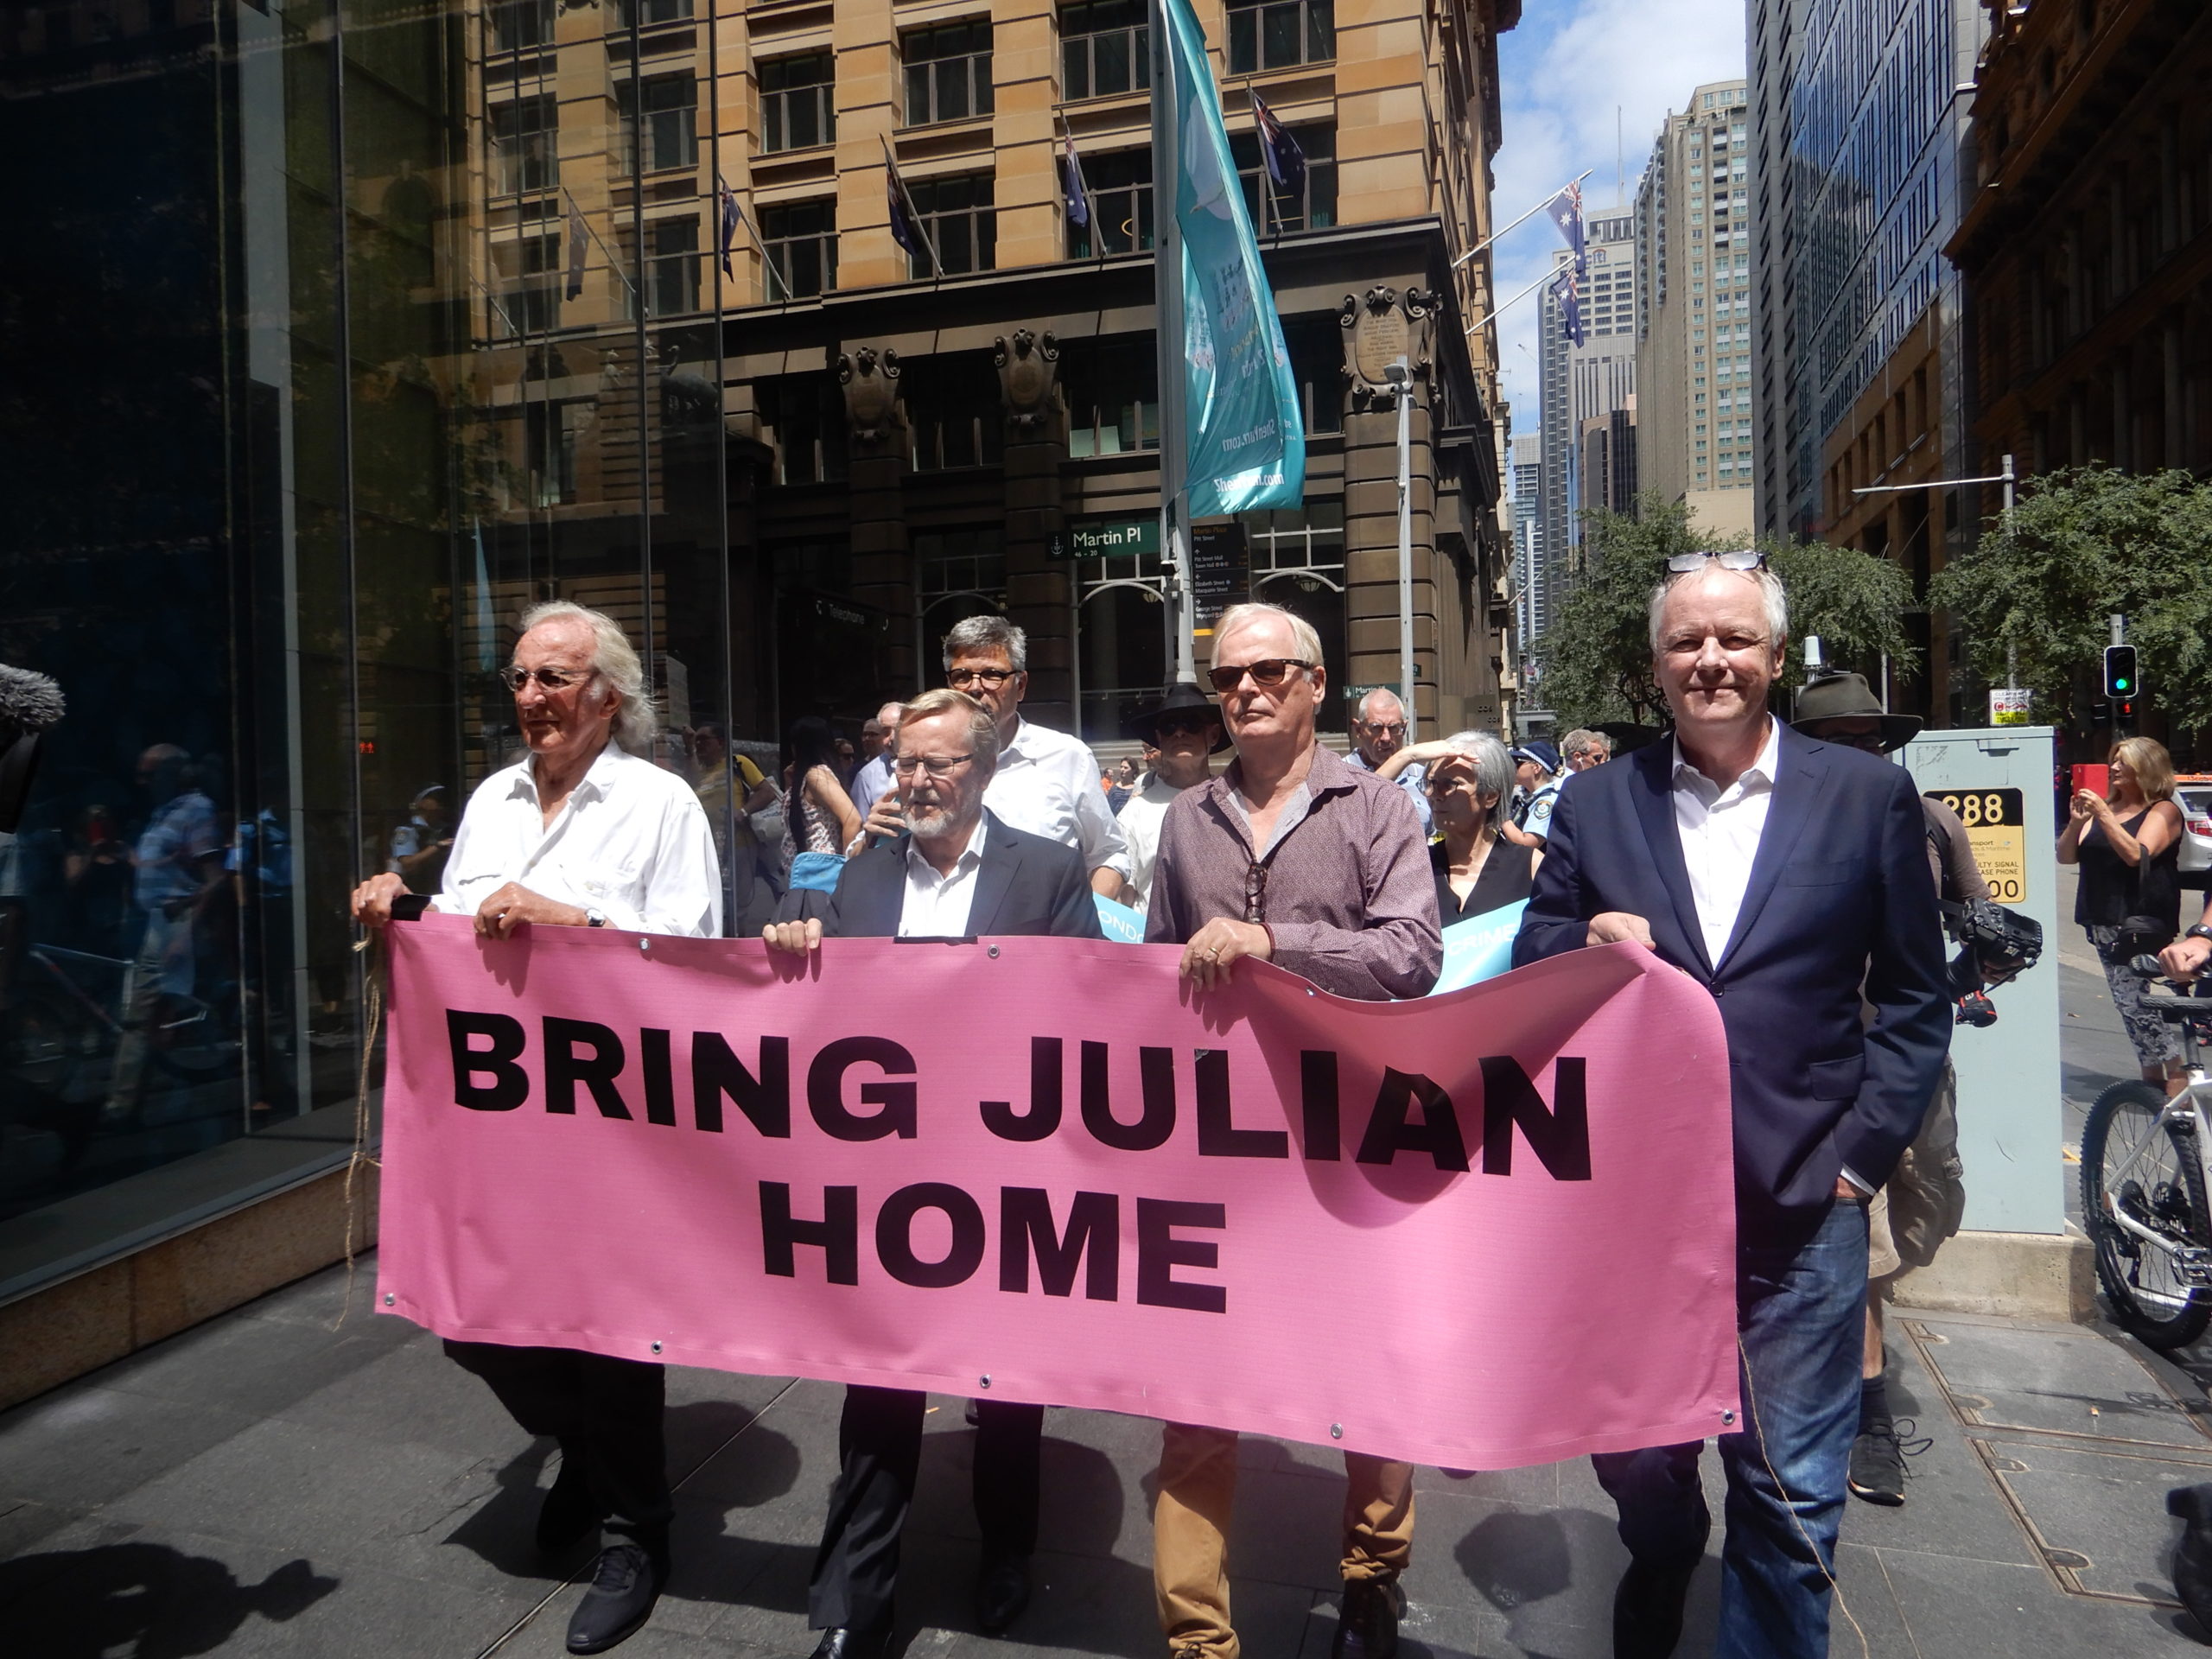 Bring Julian home